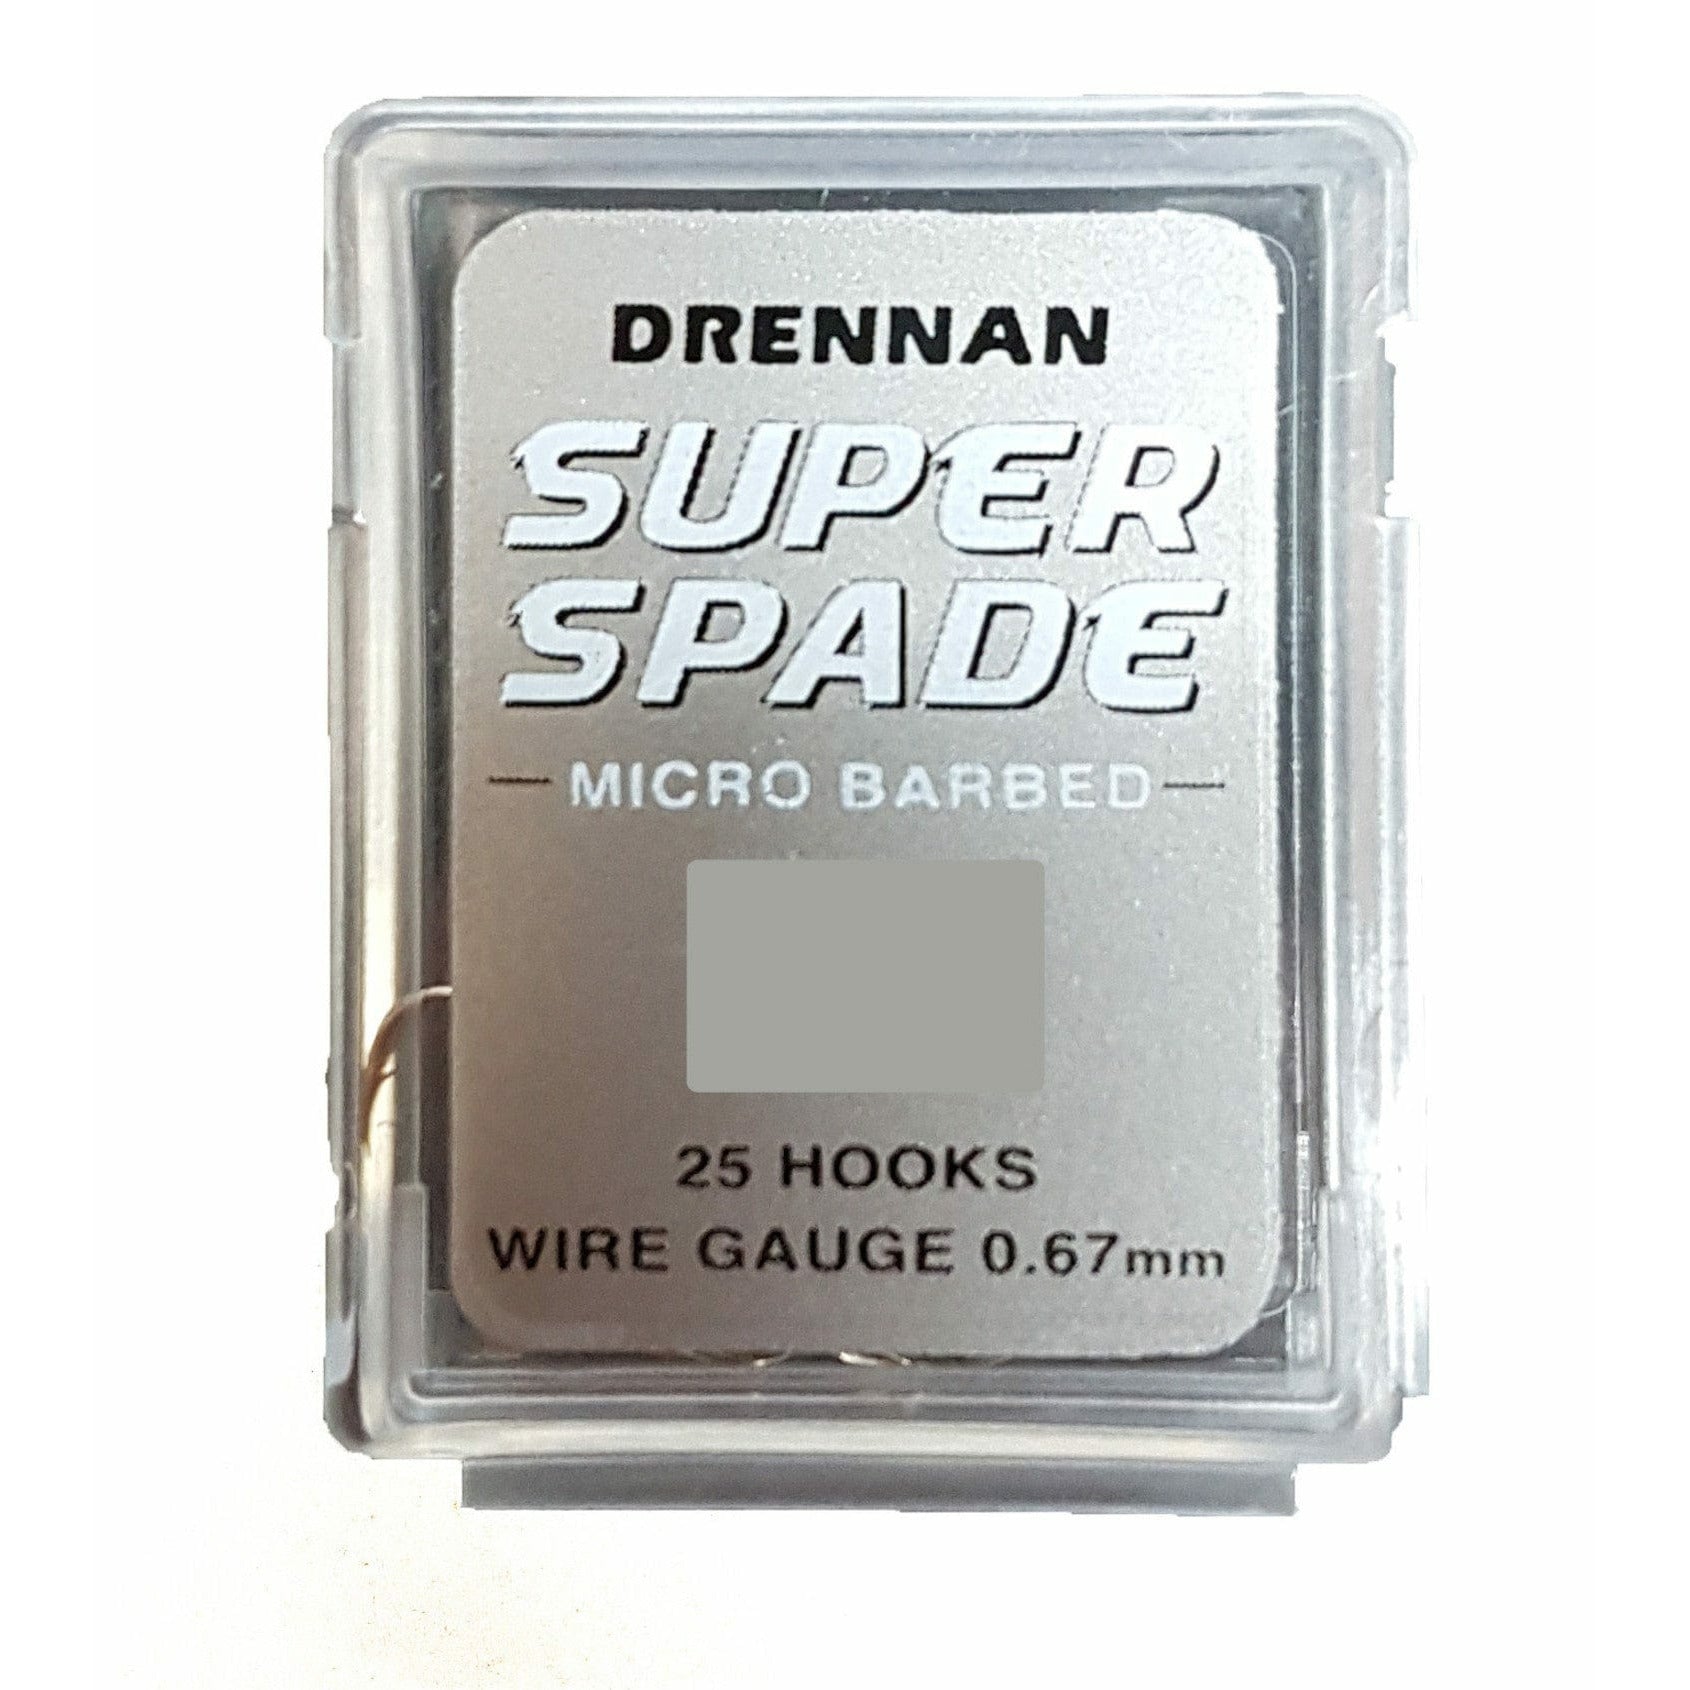 DRENNAN Super Spade BOX -25 udica u pakiranju